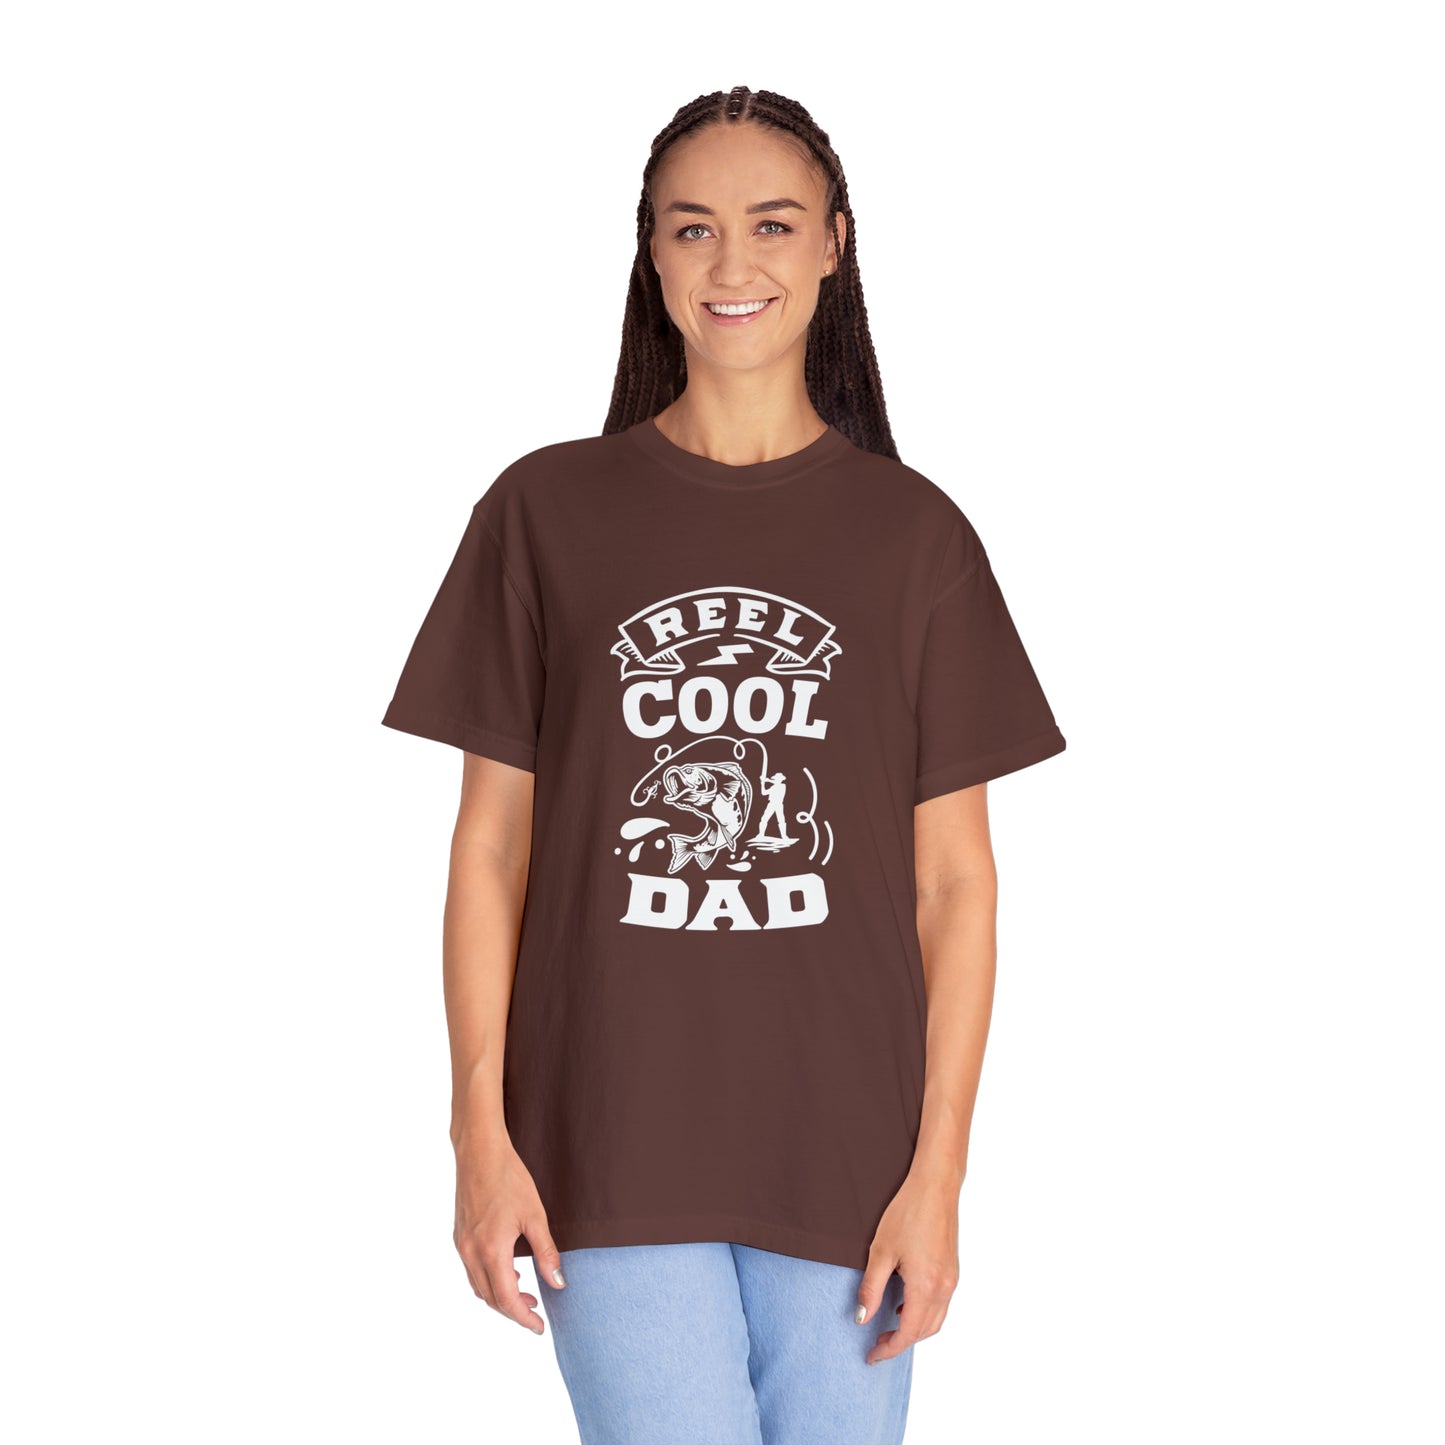 Reel Cool Dad camiseta blanca